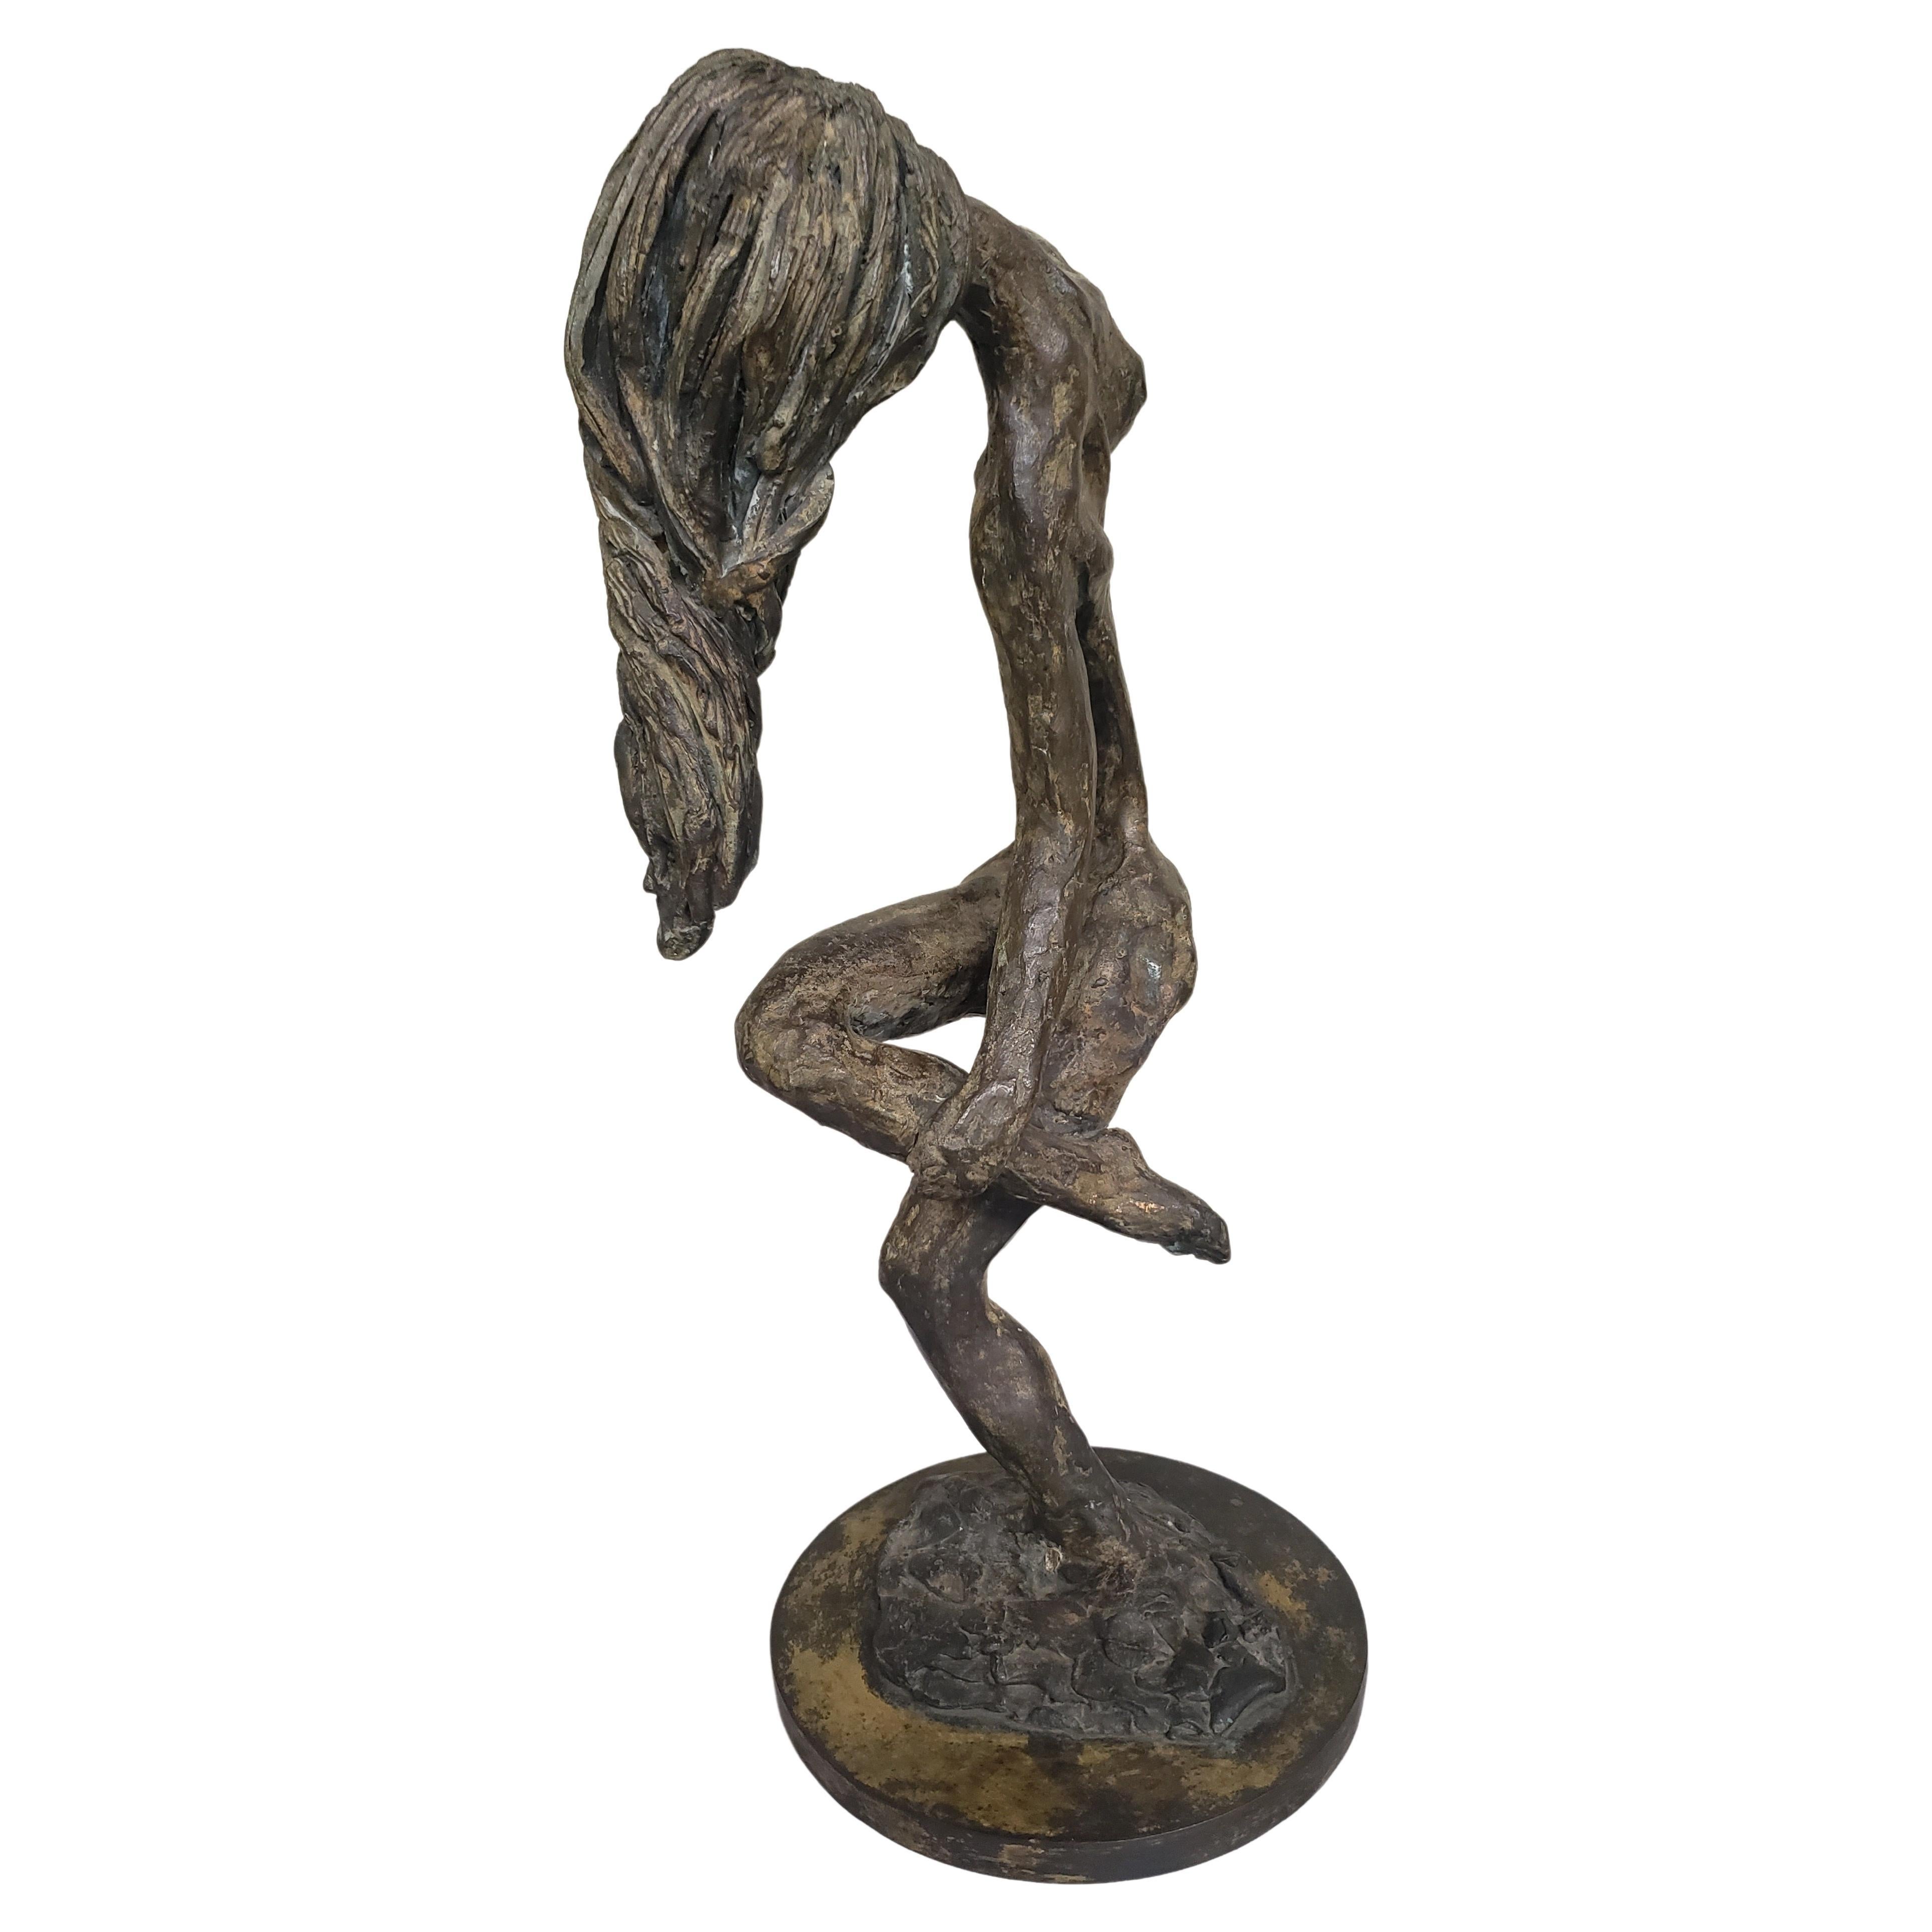 20th Century School Brutalist Bronze Figurative Sculpture Of A Woman standind on one leg. Measures 9